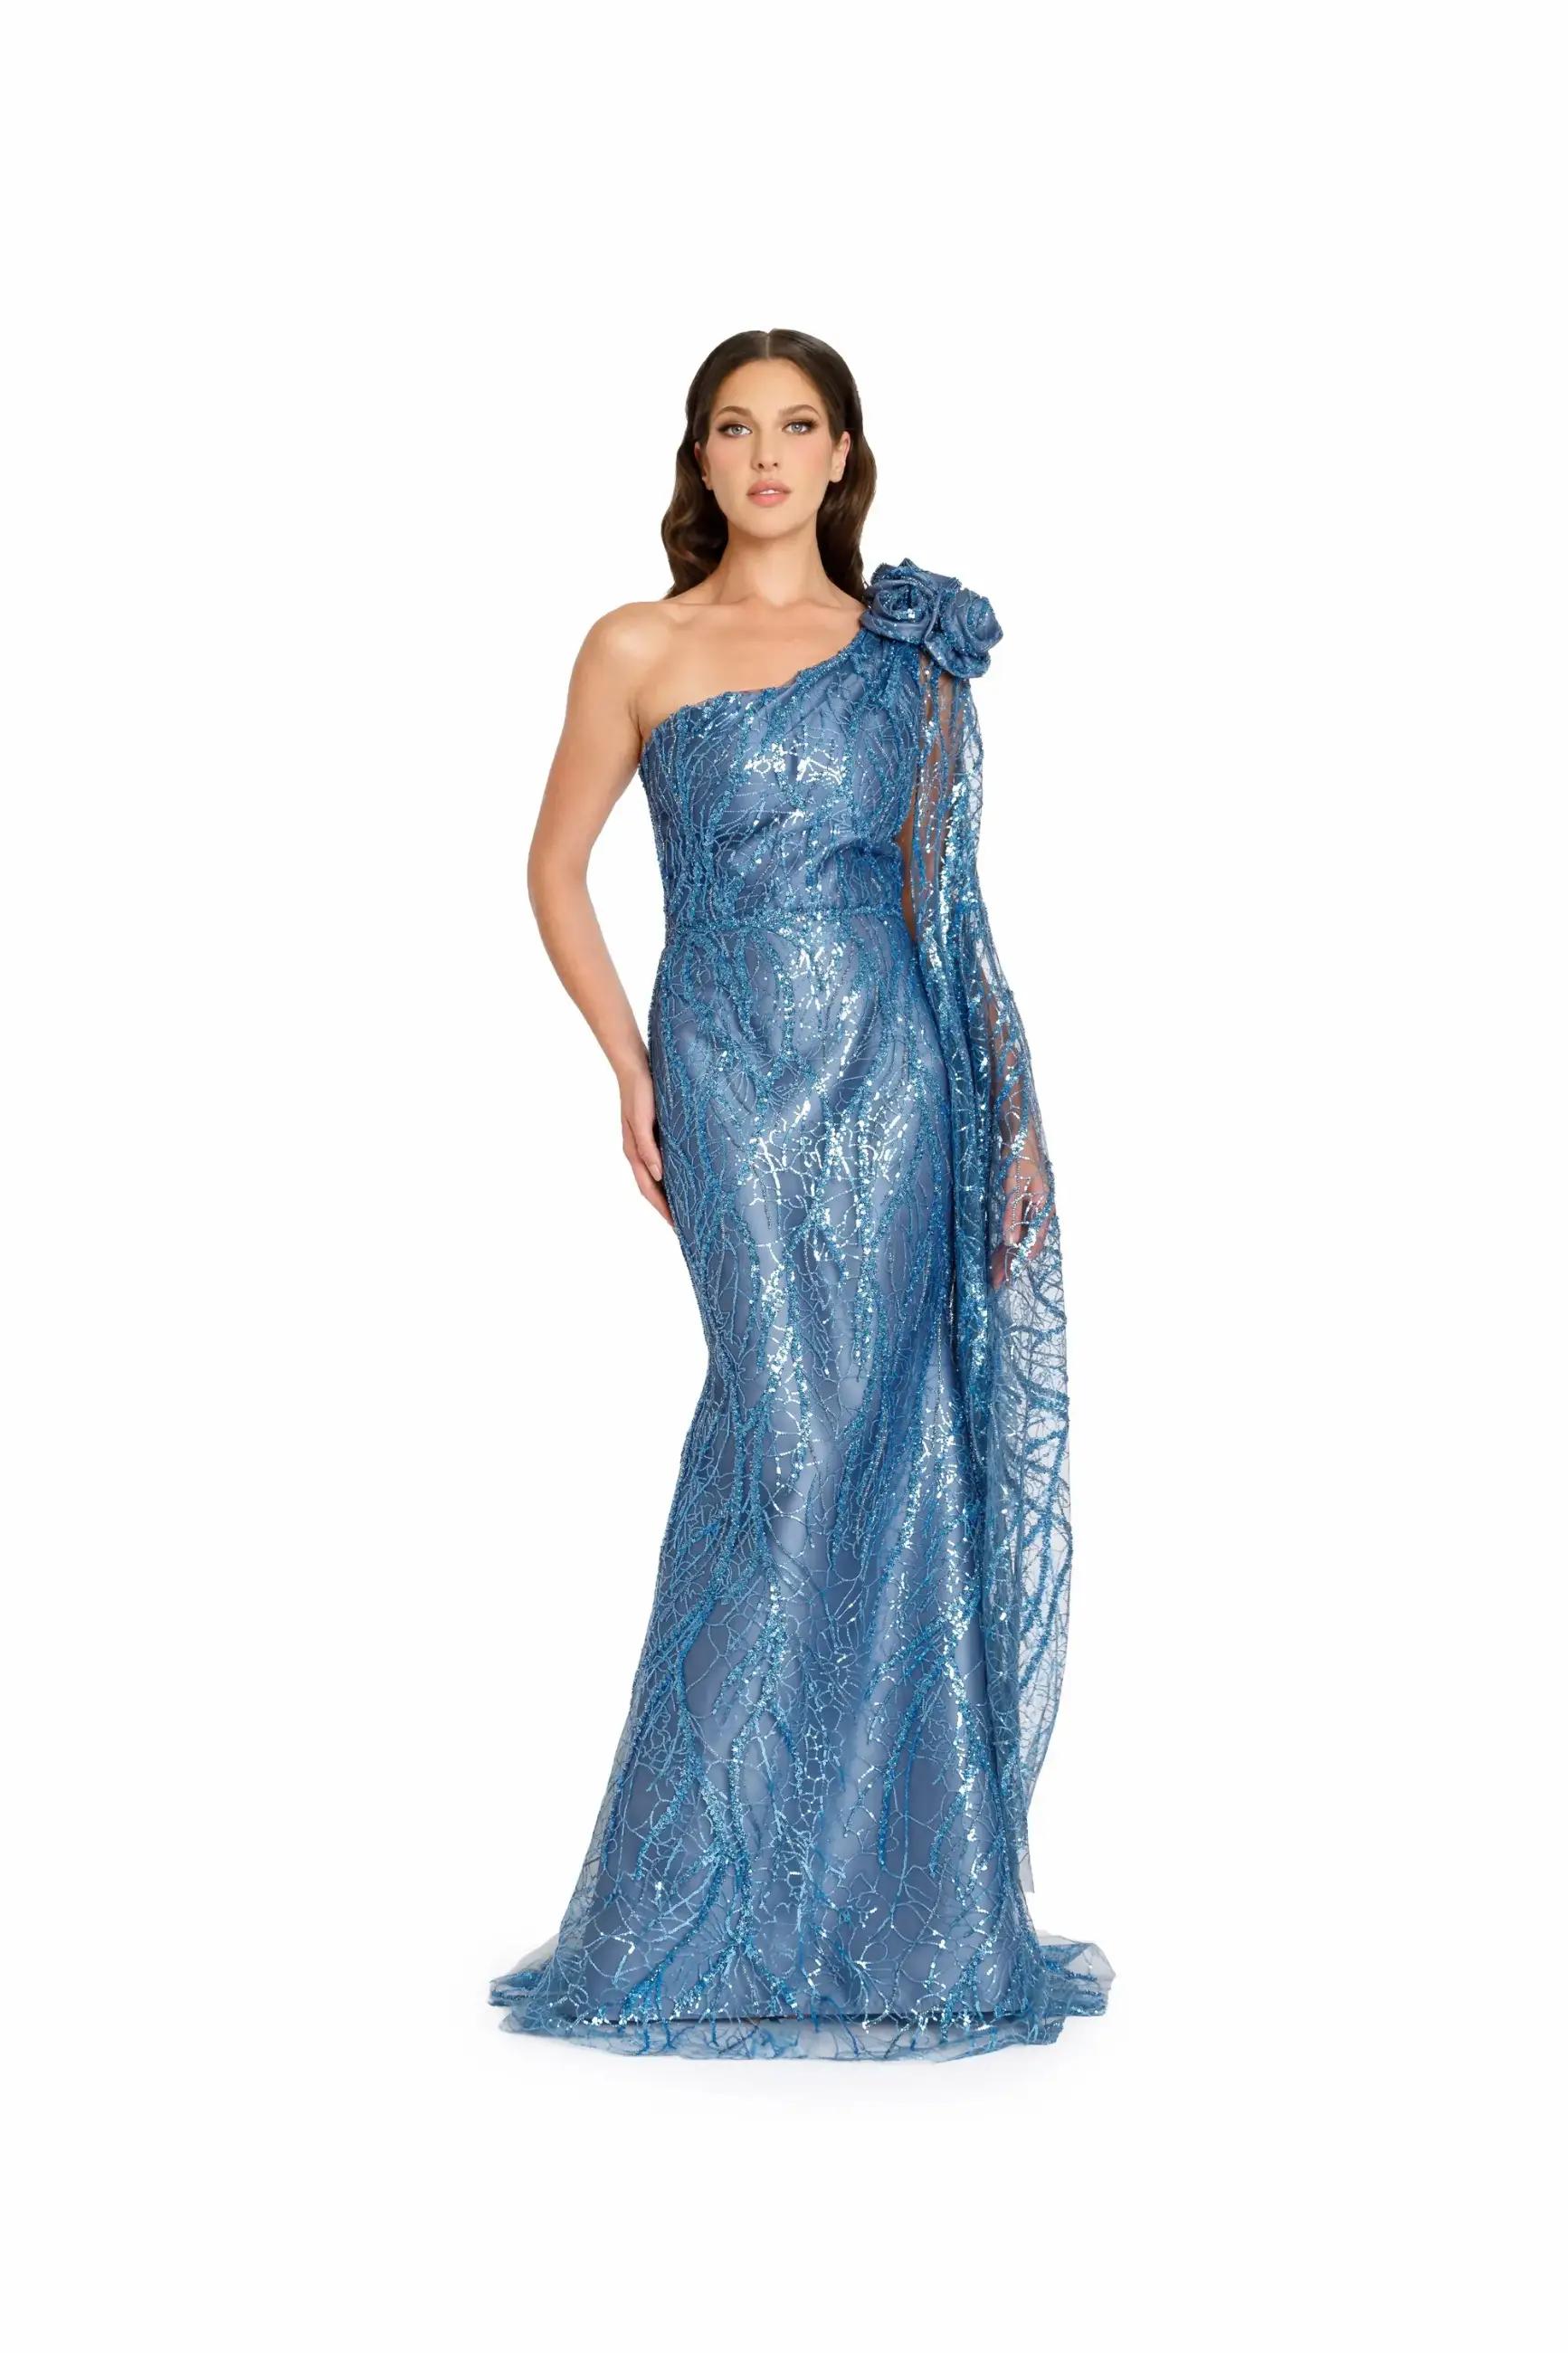 Model wearing a long blue evening gown